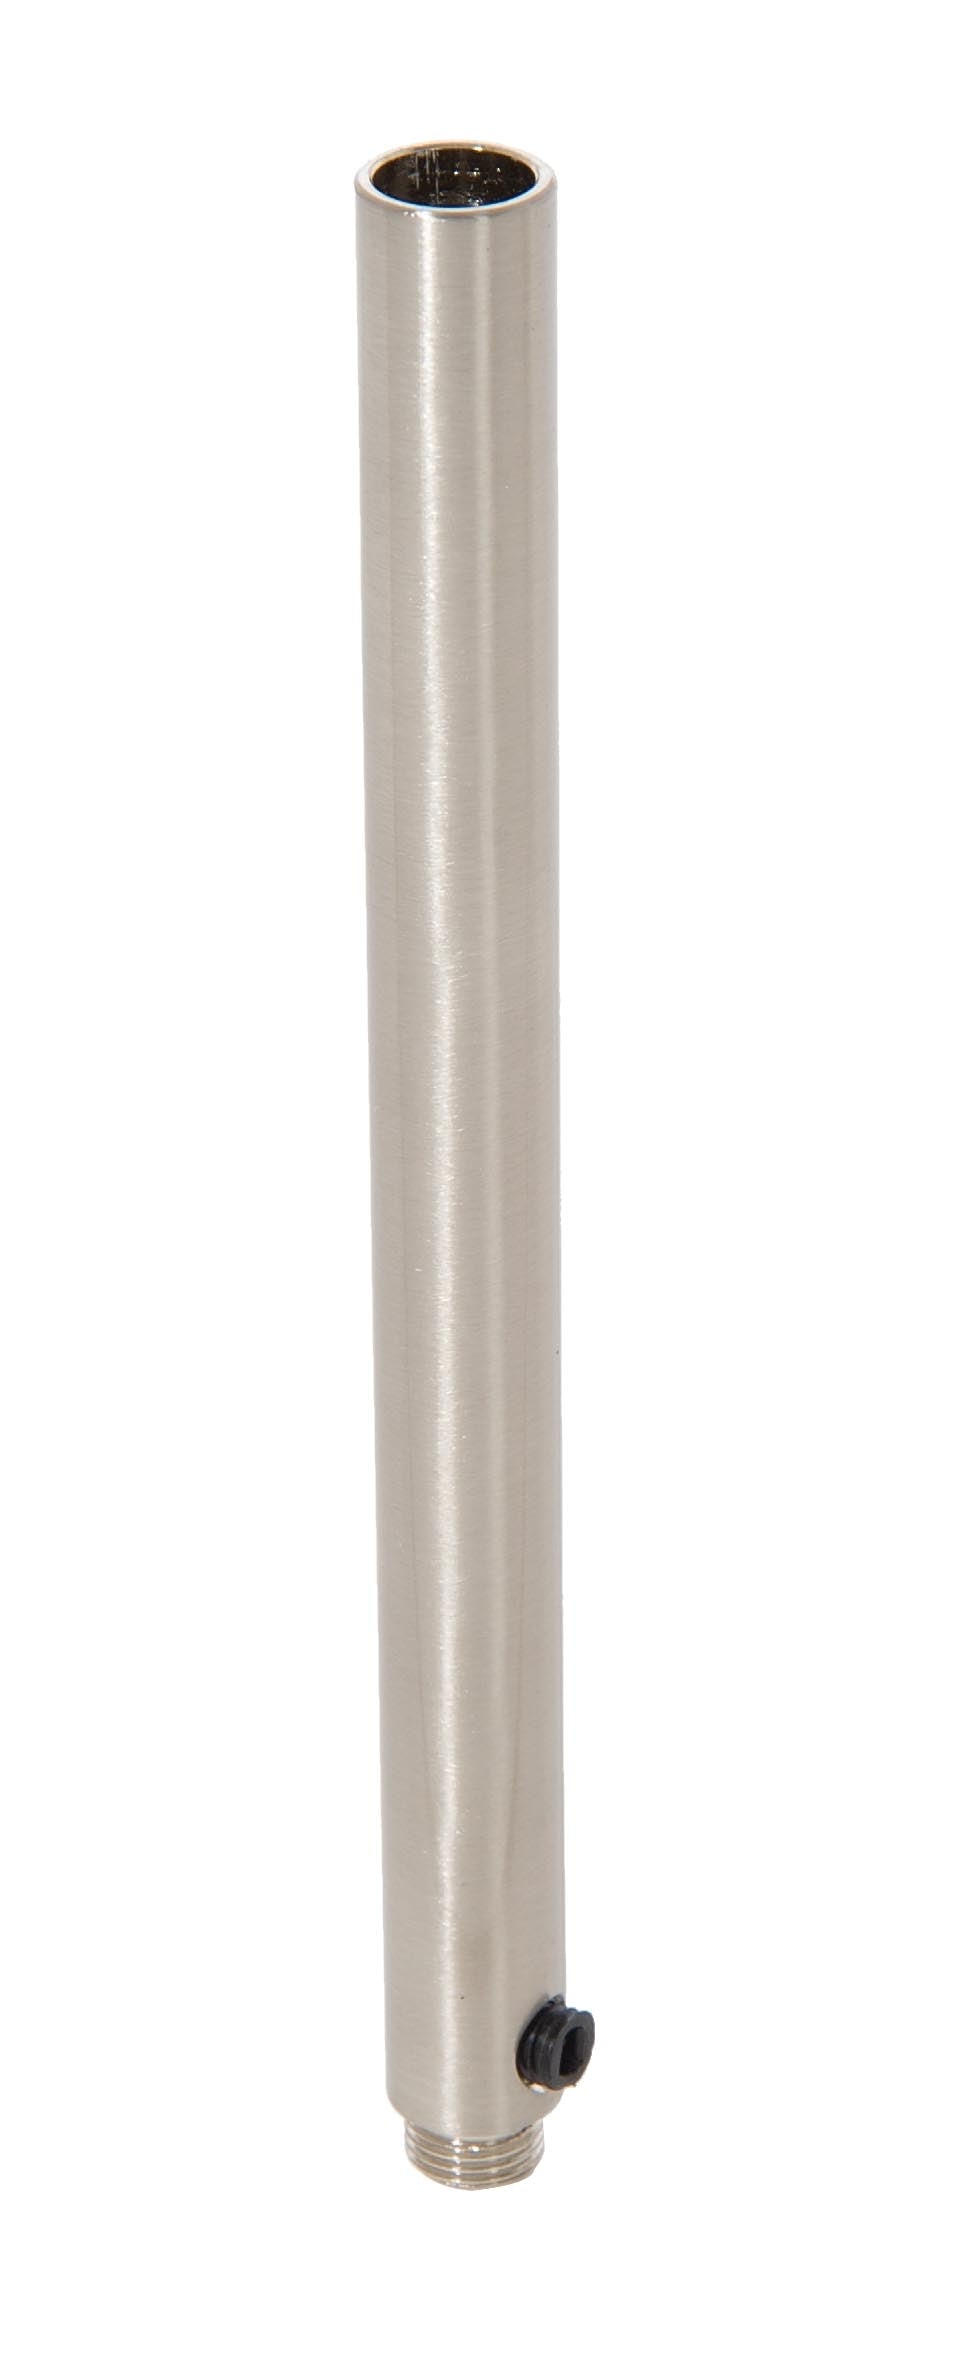 6 Inch Tall Brass Satin Nickel Hollow Transition Cord Grip Bushing w/Polycarbonite Set Screw, 1/8M